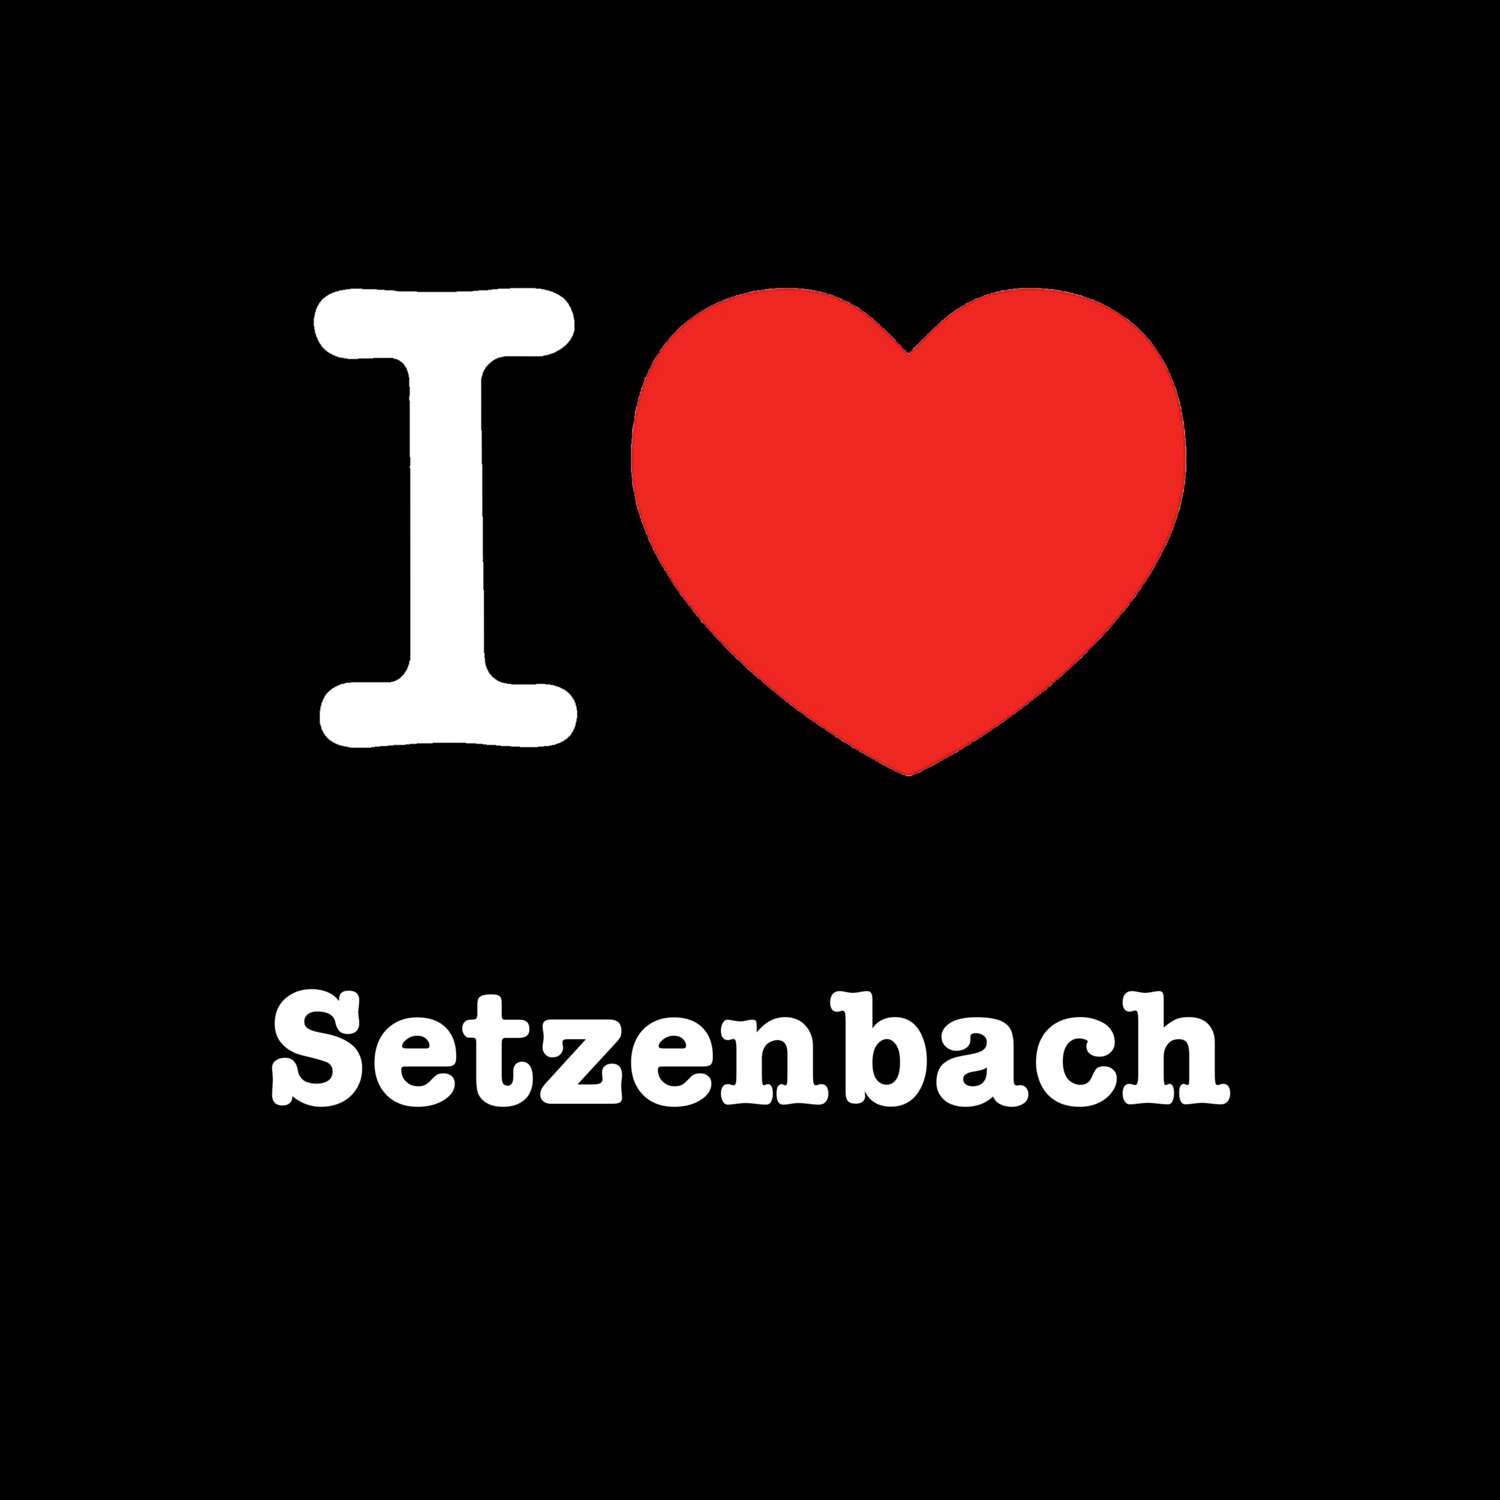 Setzenbach T-Shirt »I love«